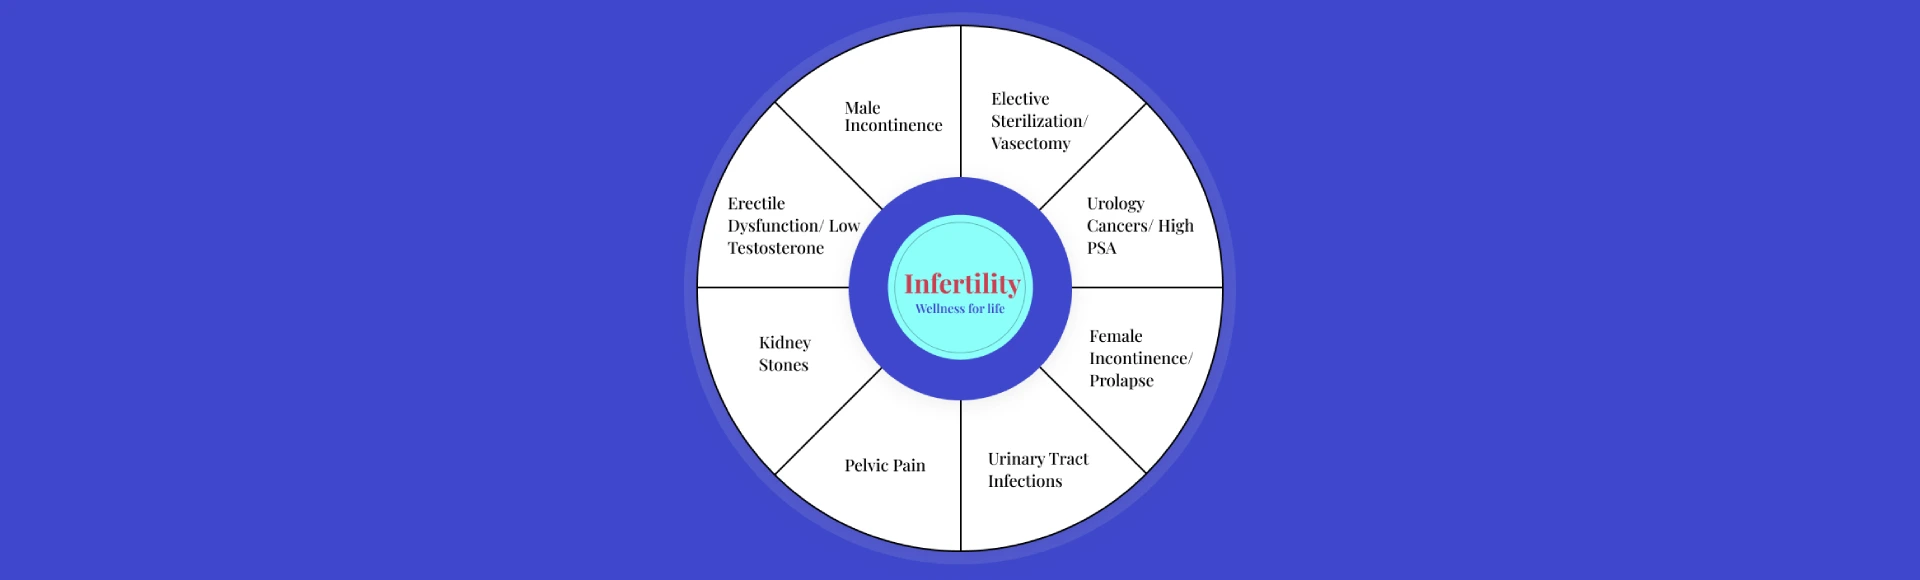 infertility chart 